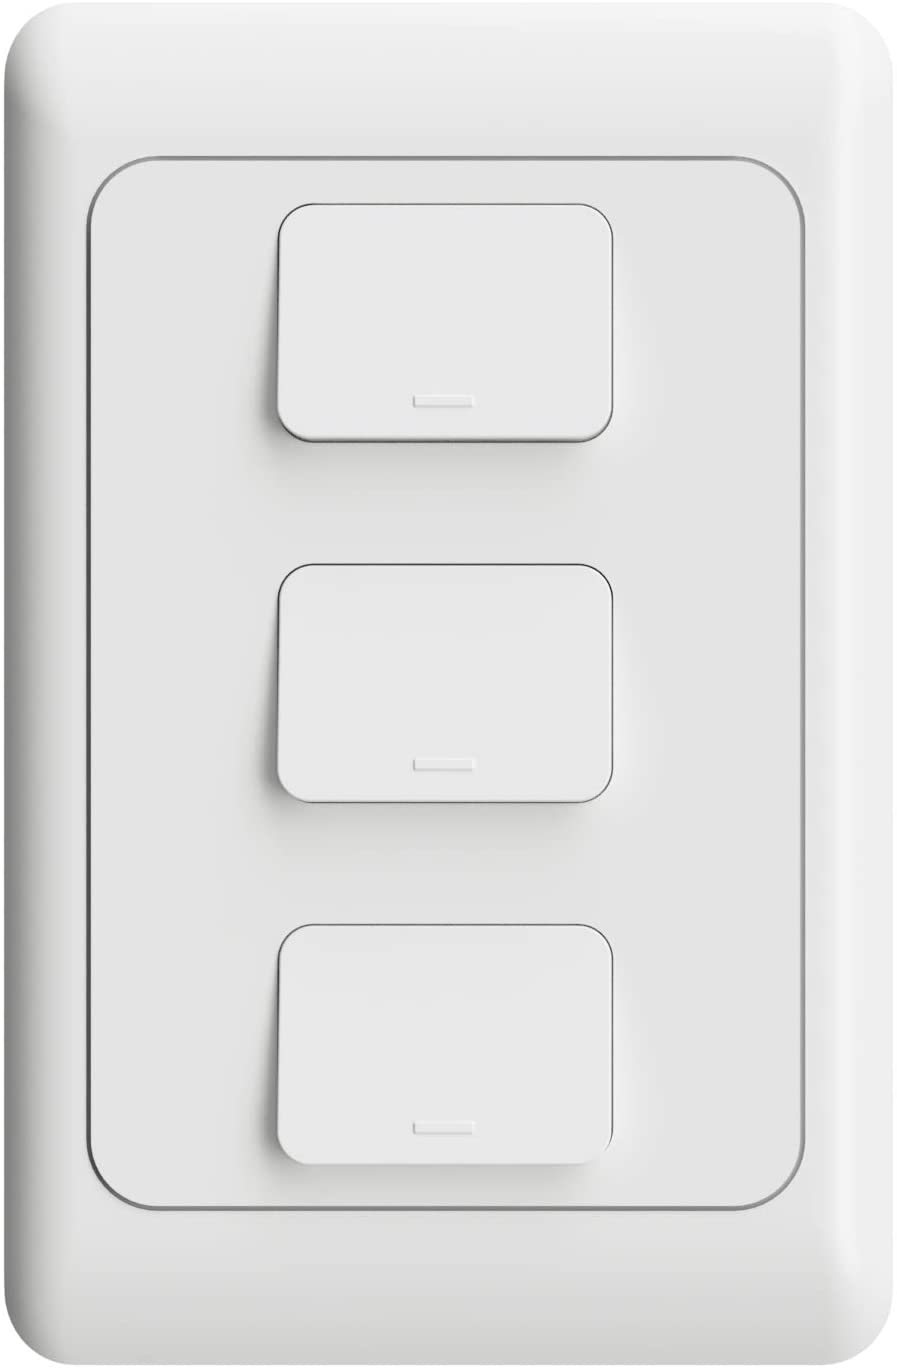 Interruptor Inteligente WiFi AGL - 03 teclas - Compatível com Alexa - Branco